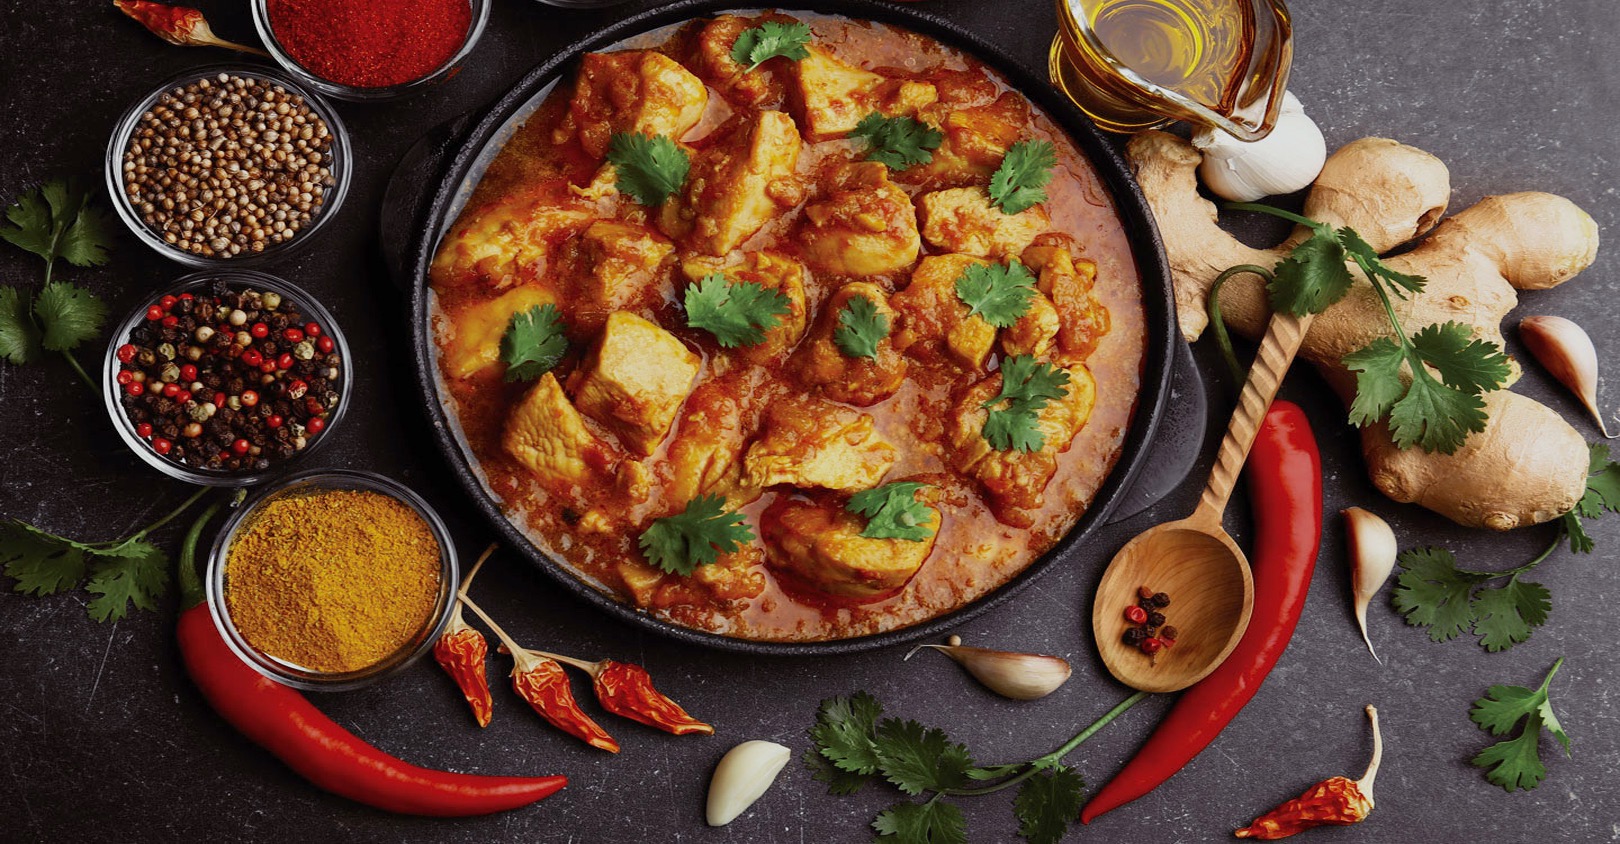 SilverSpoon Brampton - Best Indian and Pakistani Cuisine, Indian